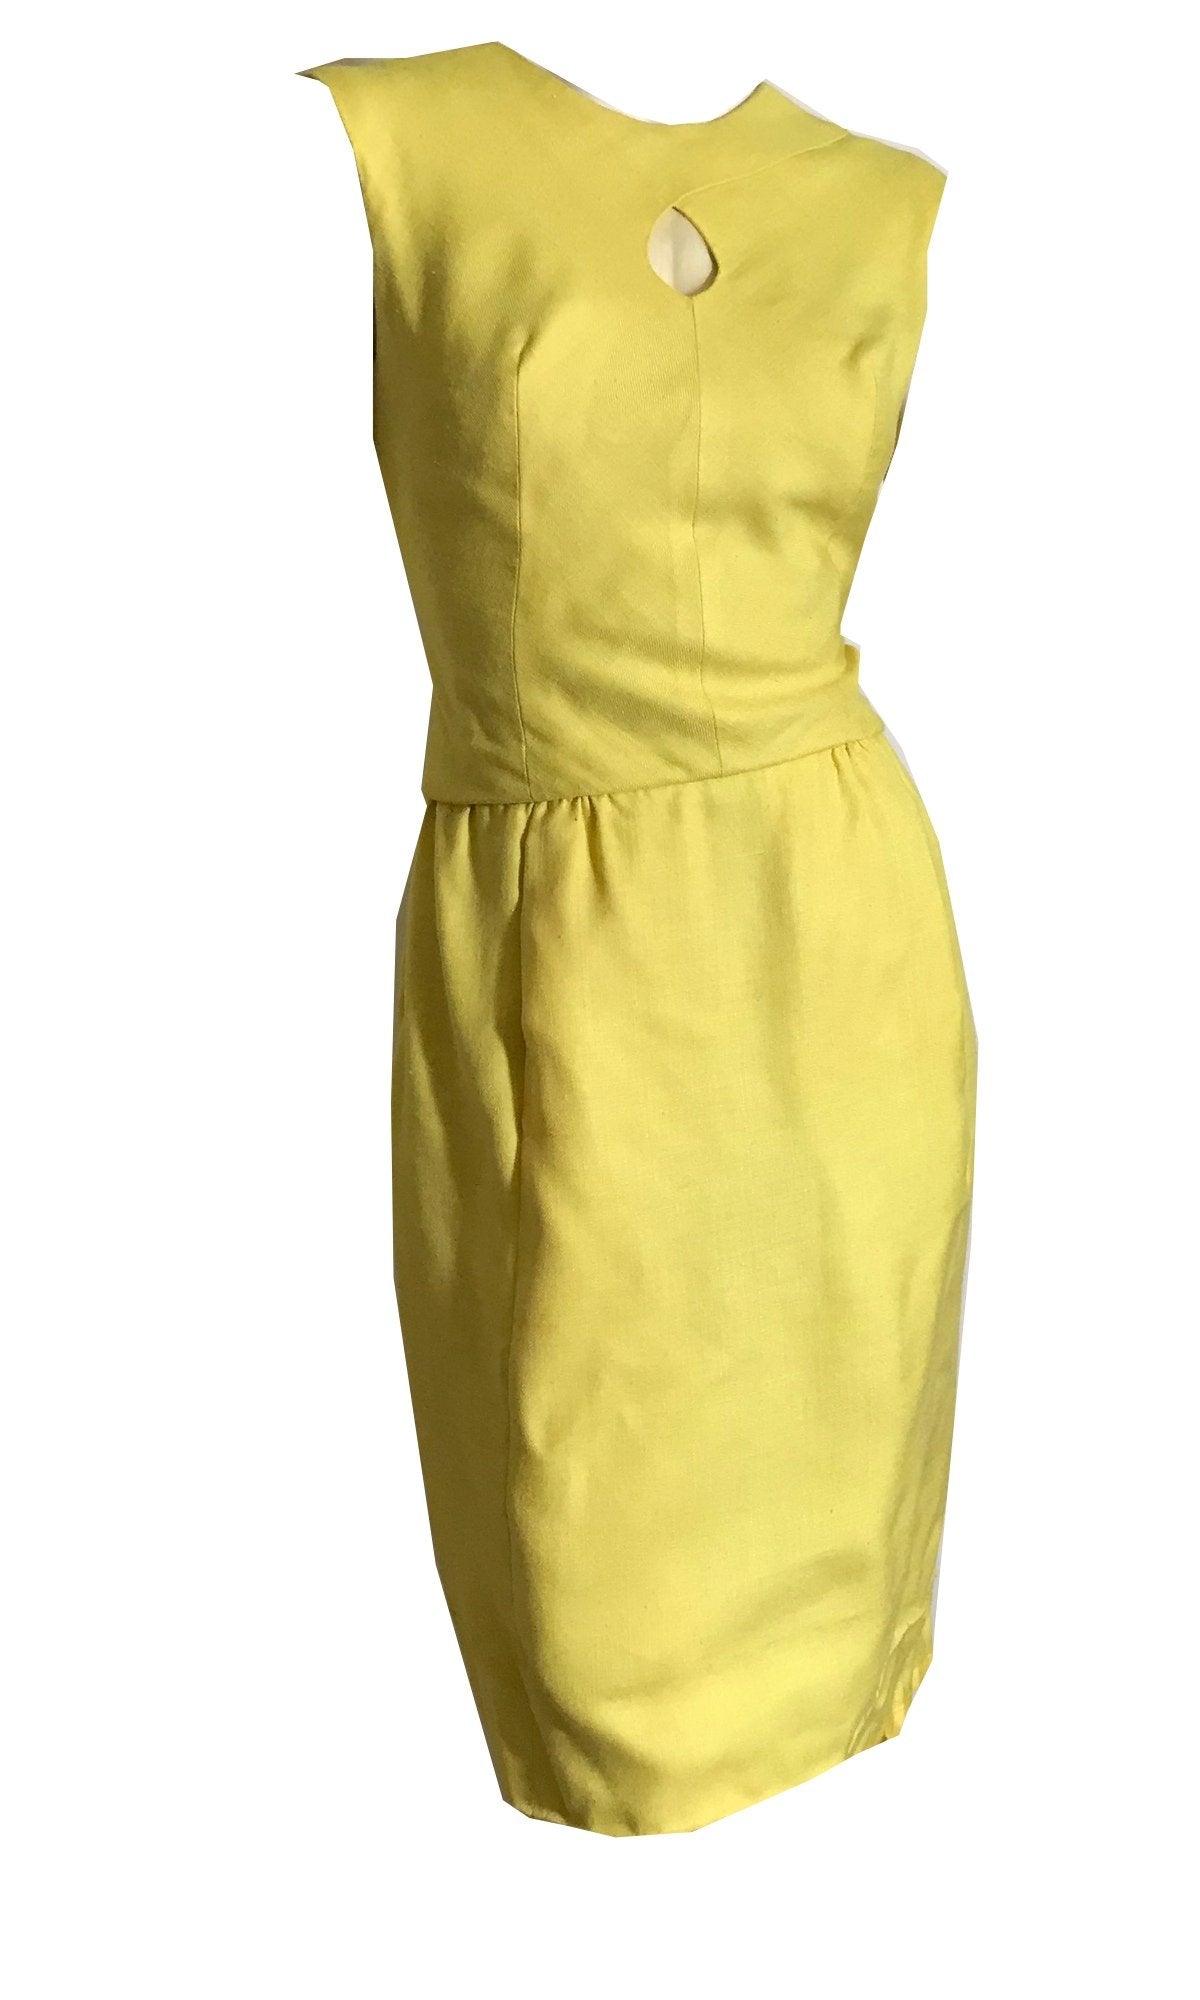 Lemony Yellow Sleeveless Dress with Keyhole Neckline and Scarf circa 1 ...